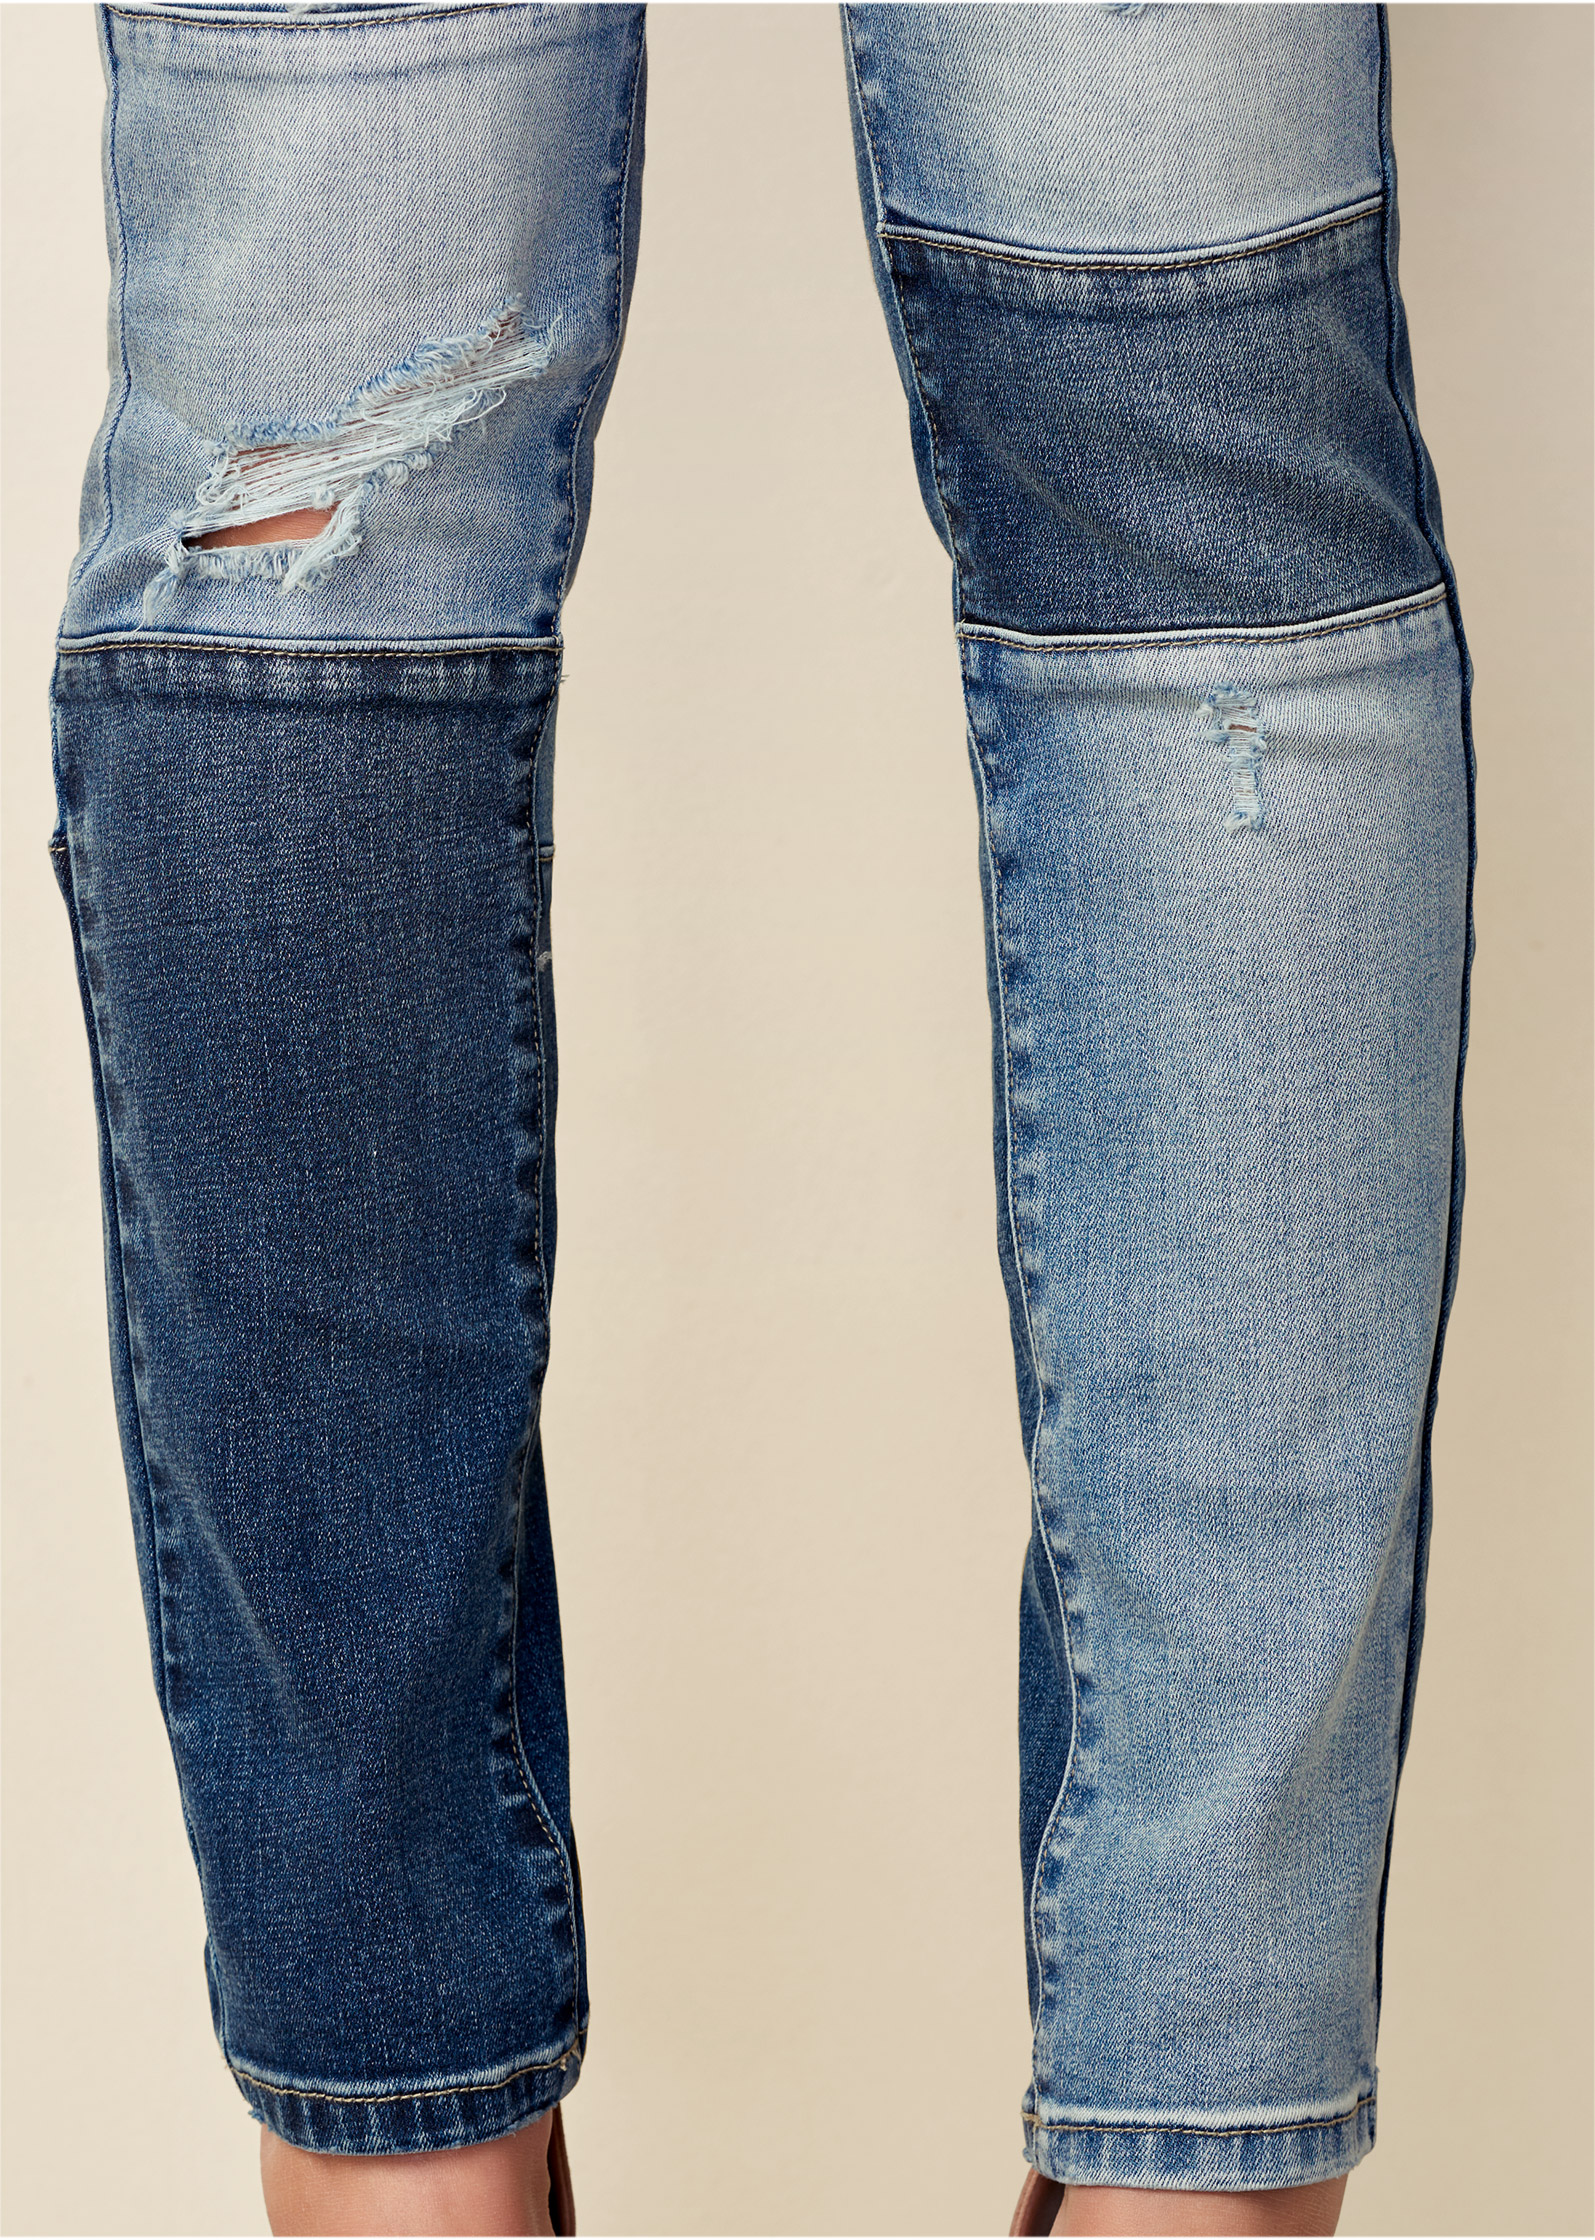 venus patchwork jeans